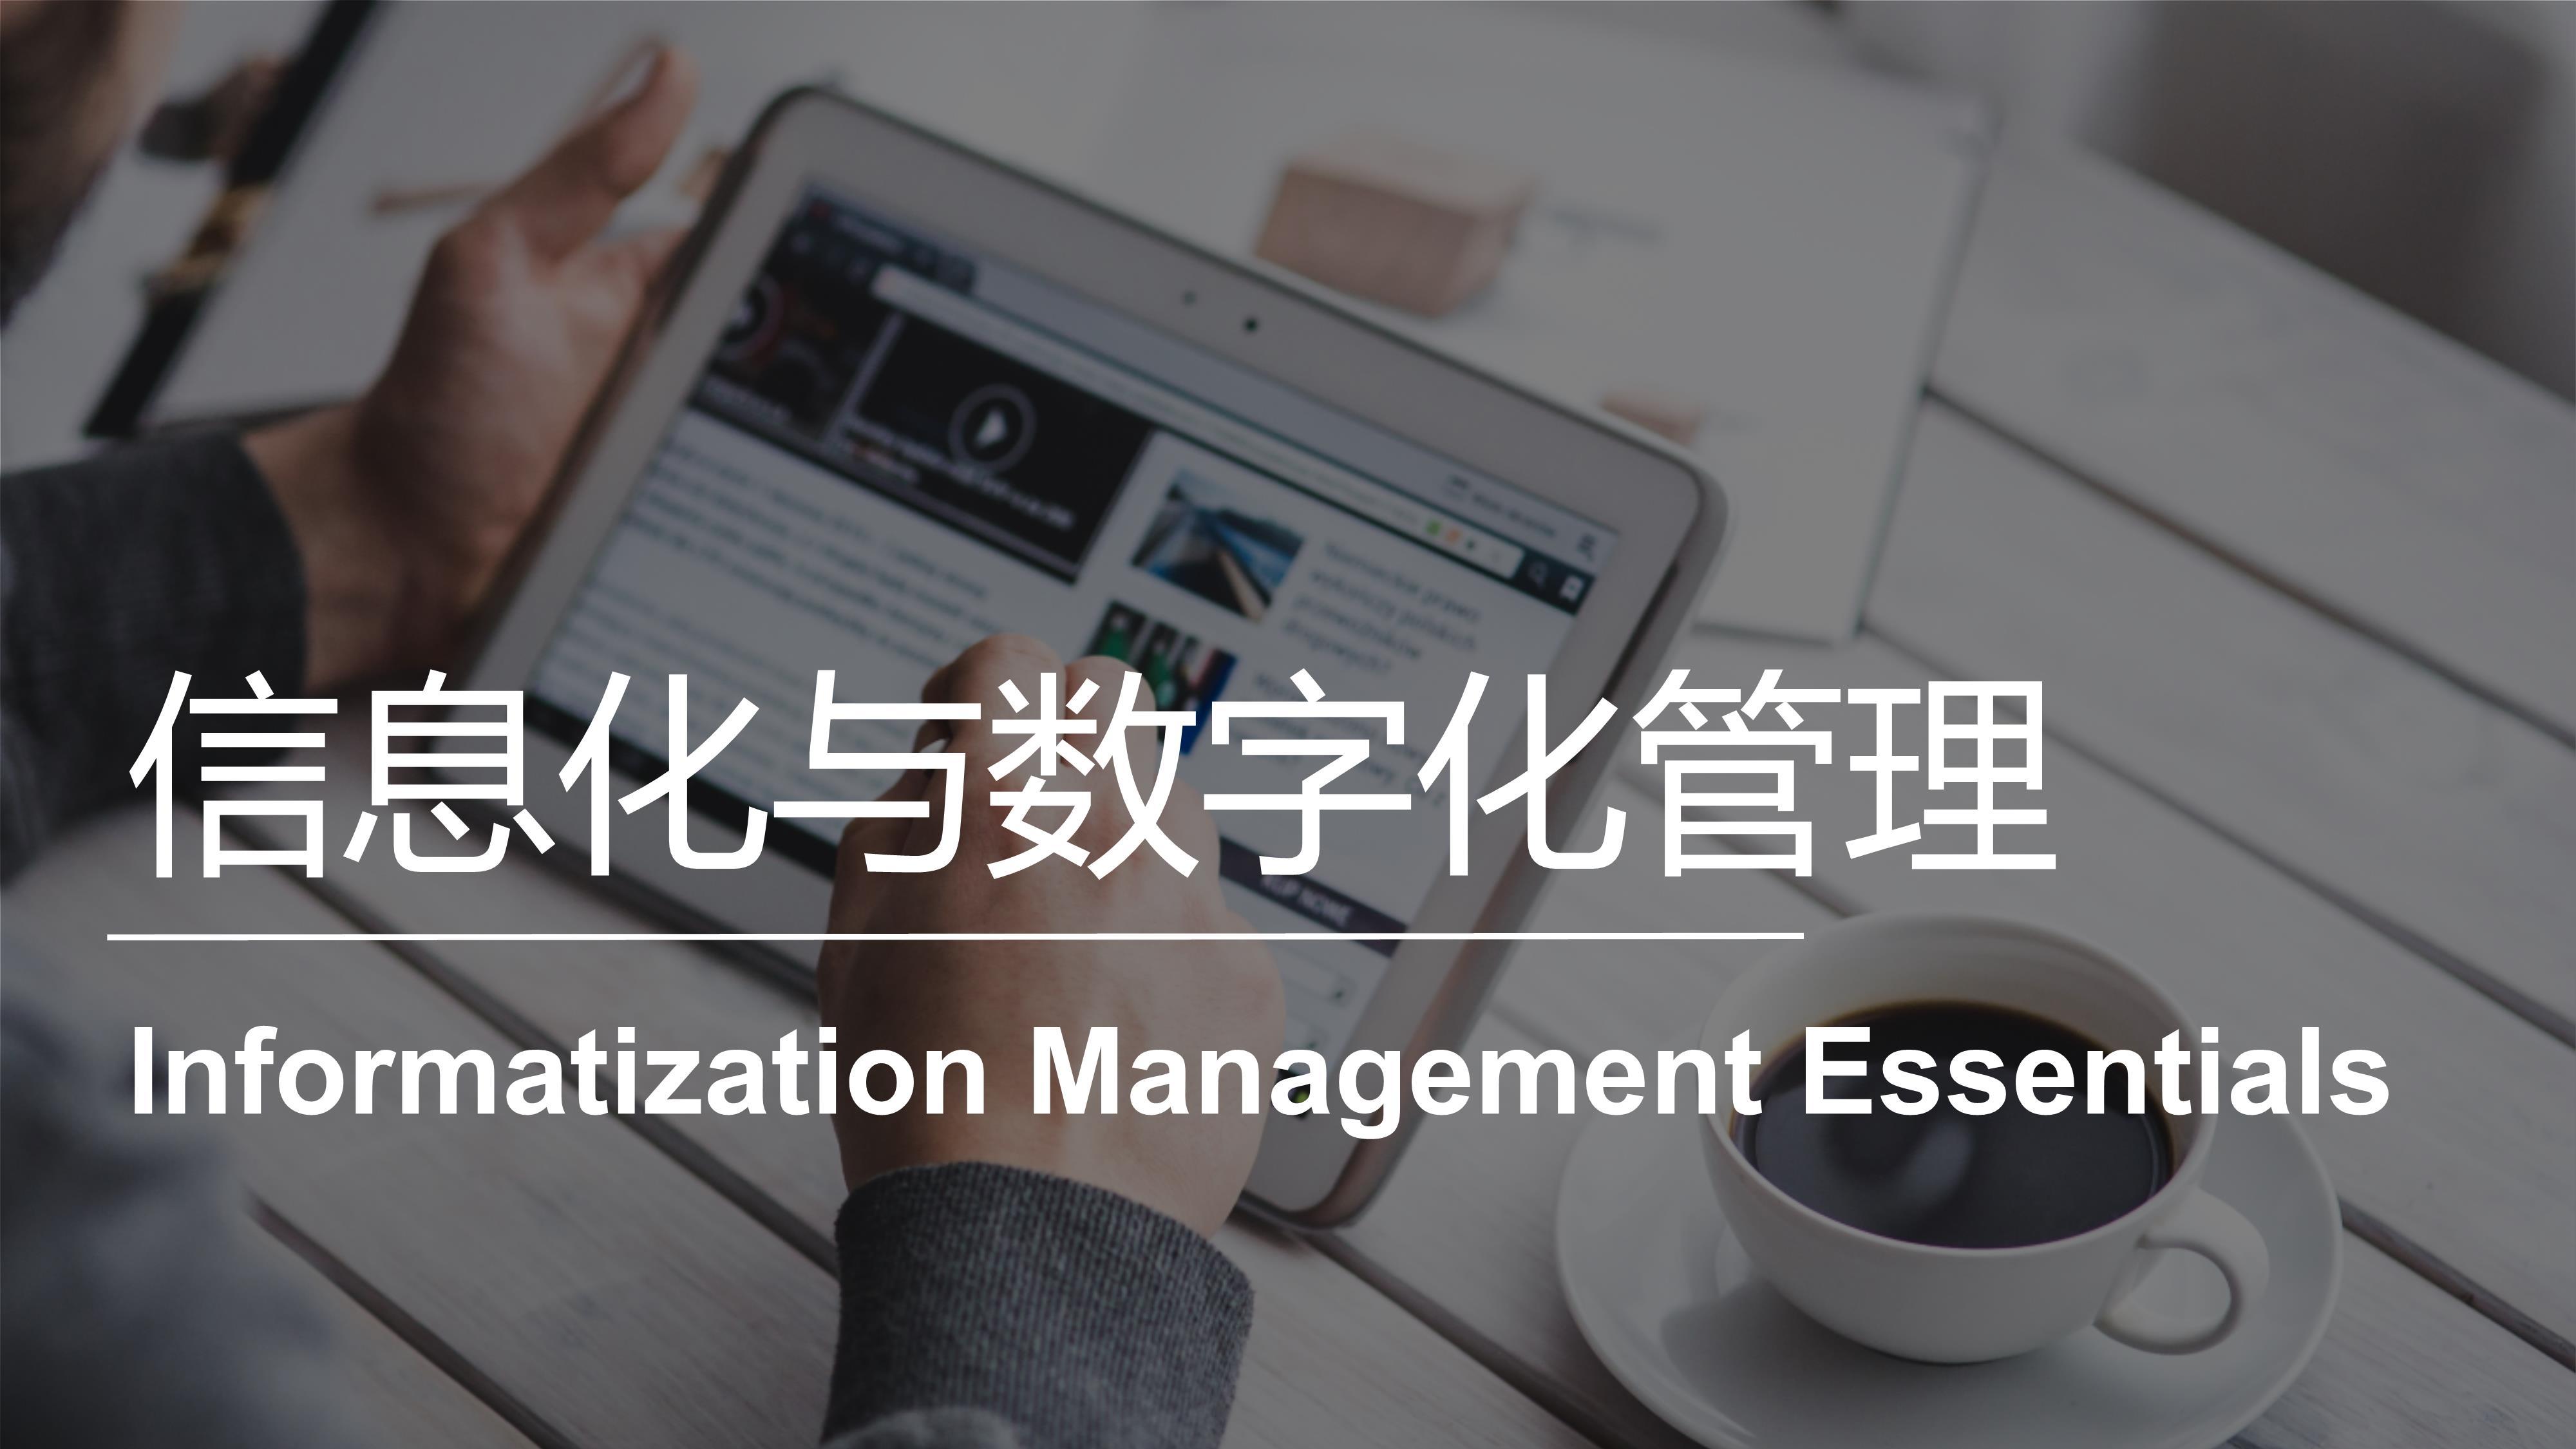 信息化与数字化管理 | Informatization Management Essentials 20221101193708